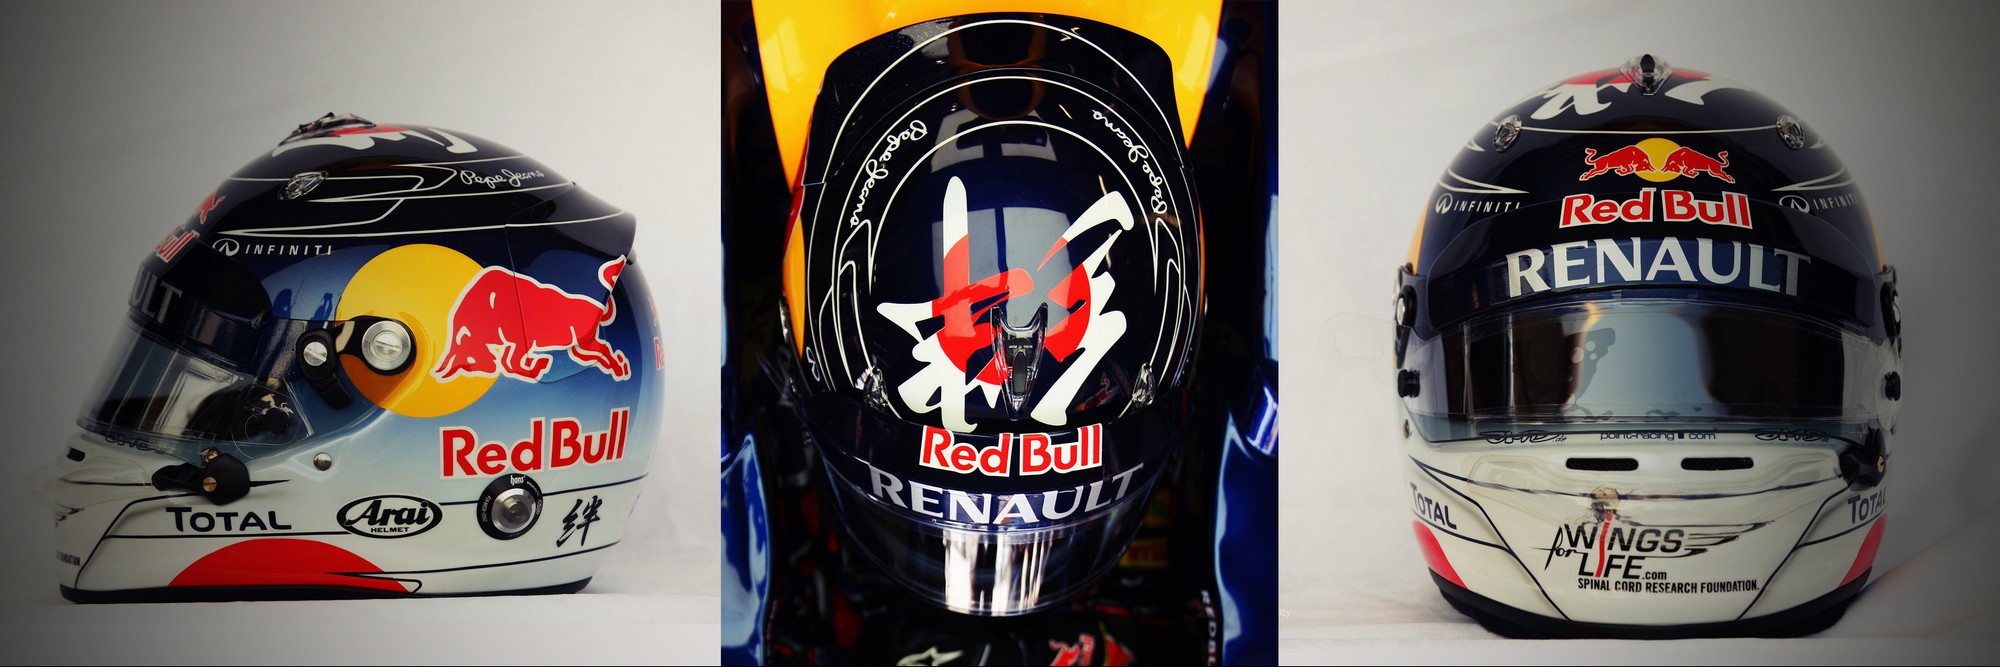 Шлем Себастьяна Феттеля на Гран-При Японии 2011 | 2011 Japanese Grand Prix helmet of Sebastian Vettel